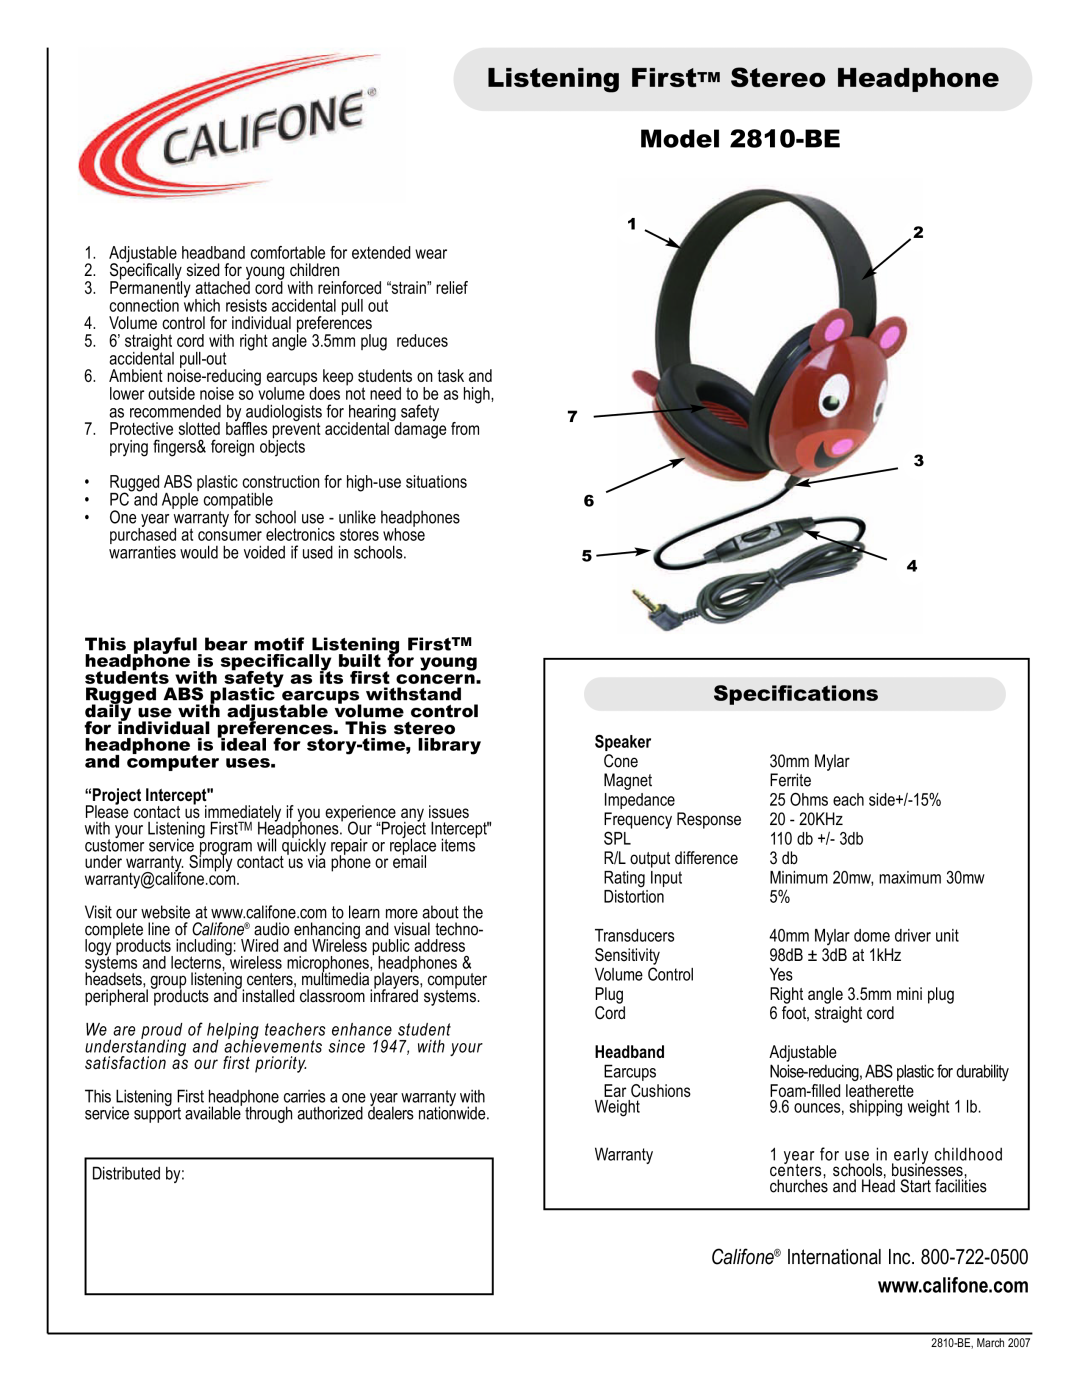 Califone specifications Listening FirstTM Stereo Headphone, Model 2810-BE, Specifications, Califone International Inc 